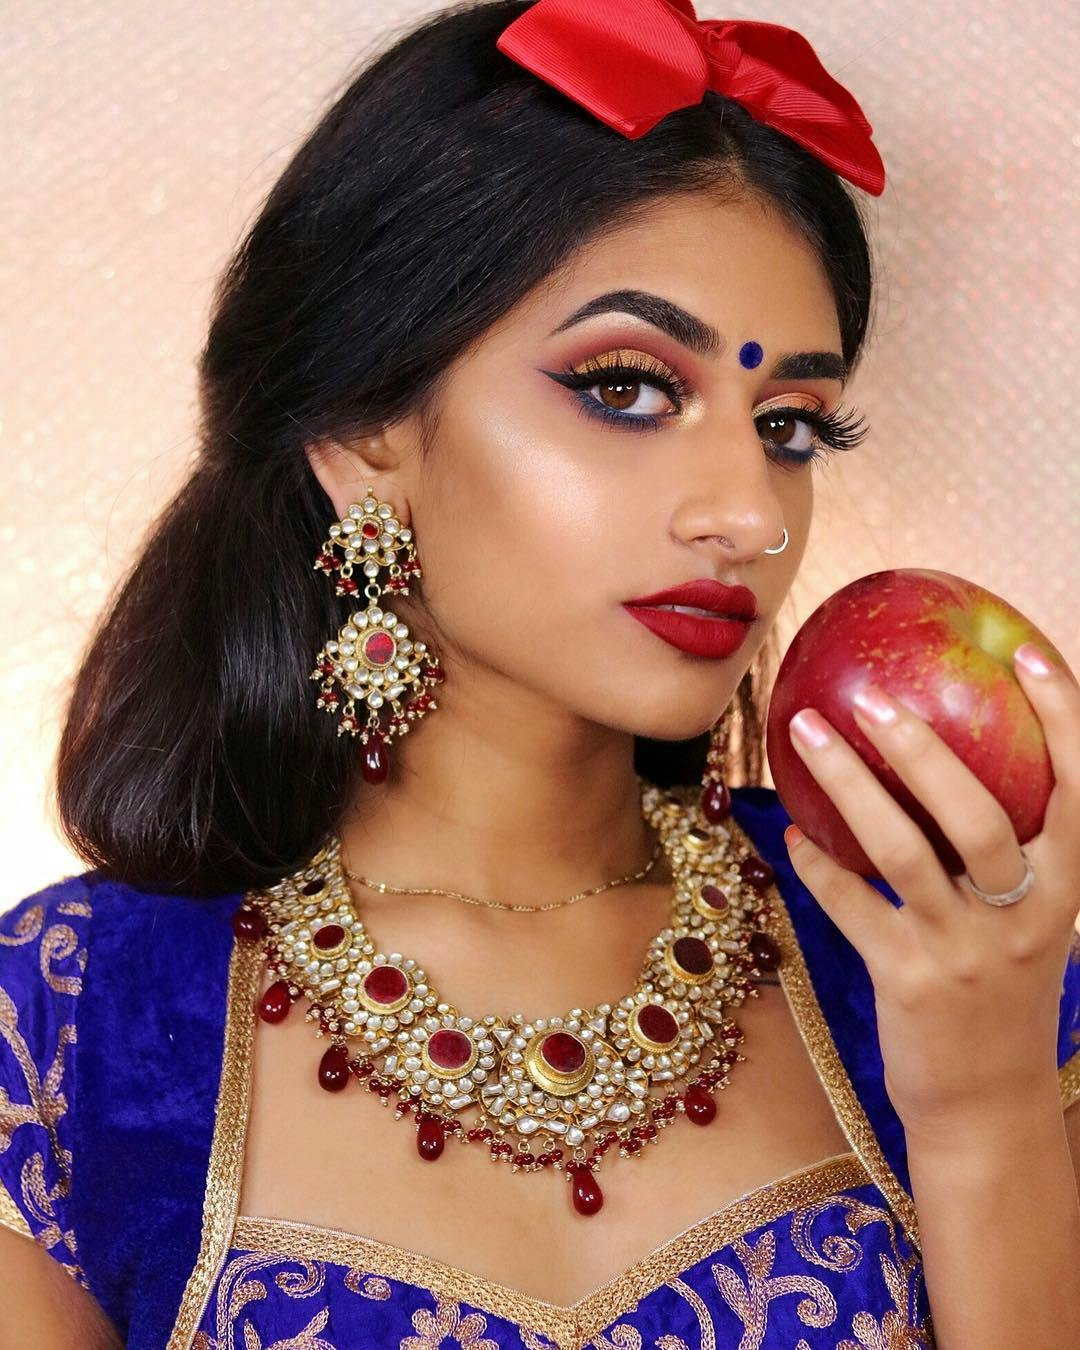 Makeup Artist Hamel Patel recreates the looks of Disney Princesses with Desi influences